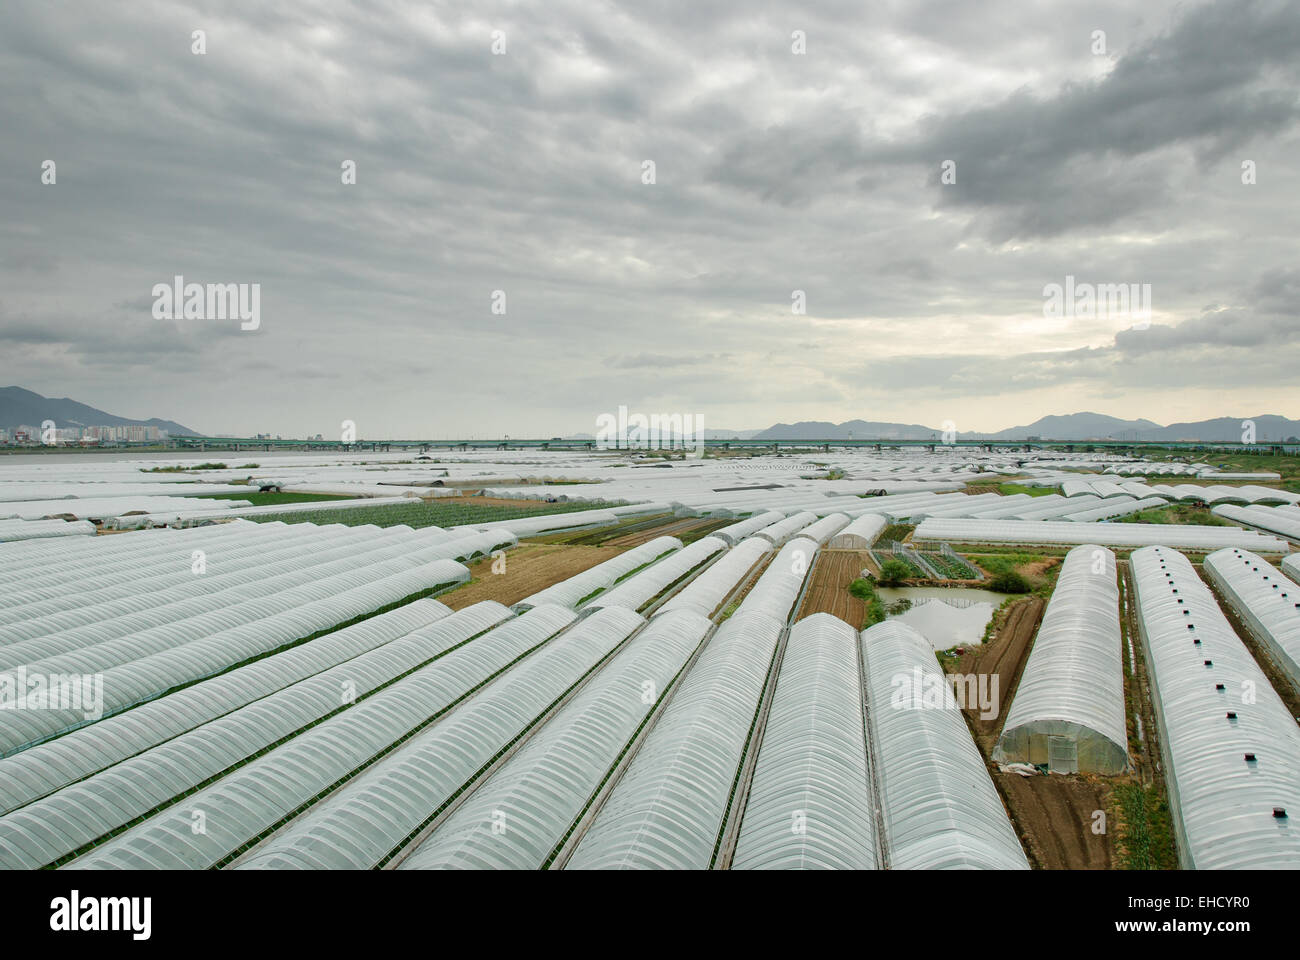 vinyl greenhouses in Gimhae field in Korea Stock Photo